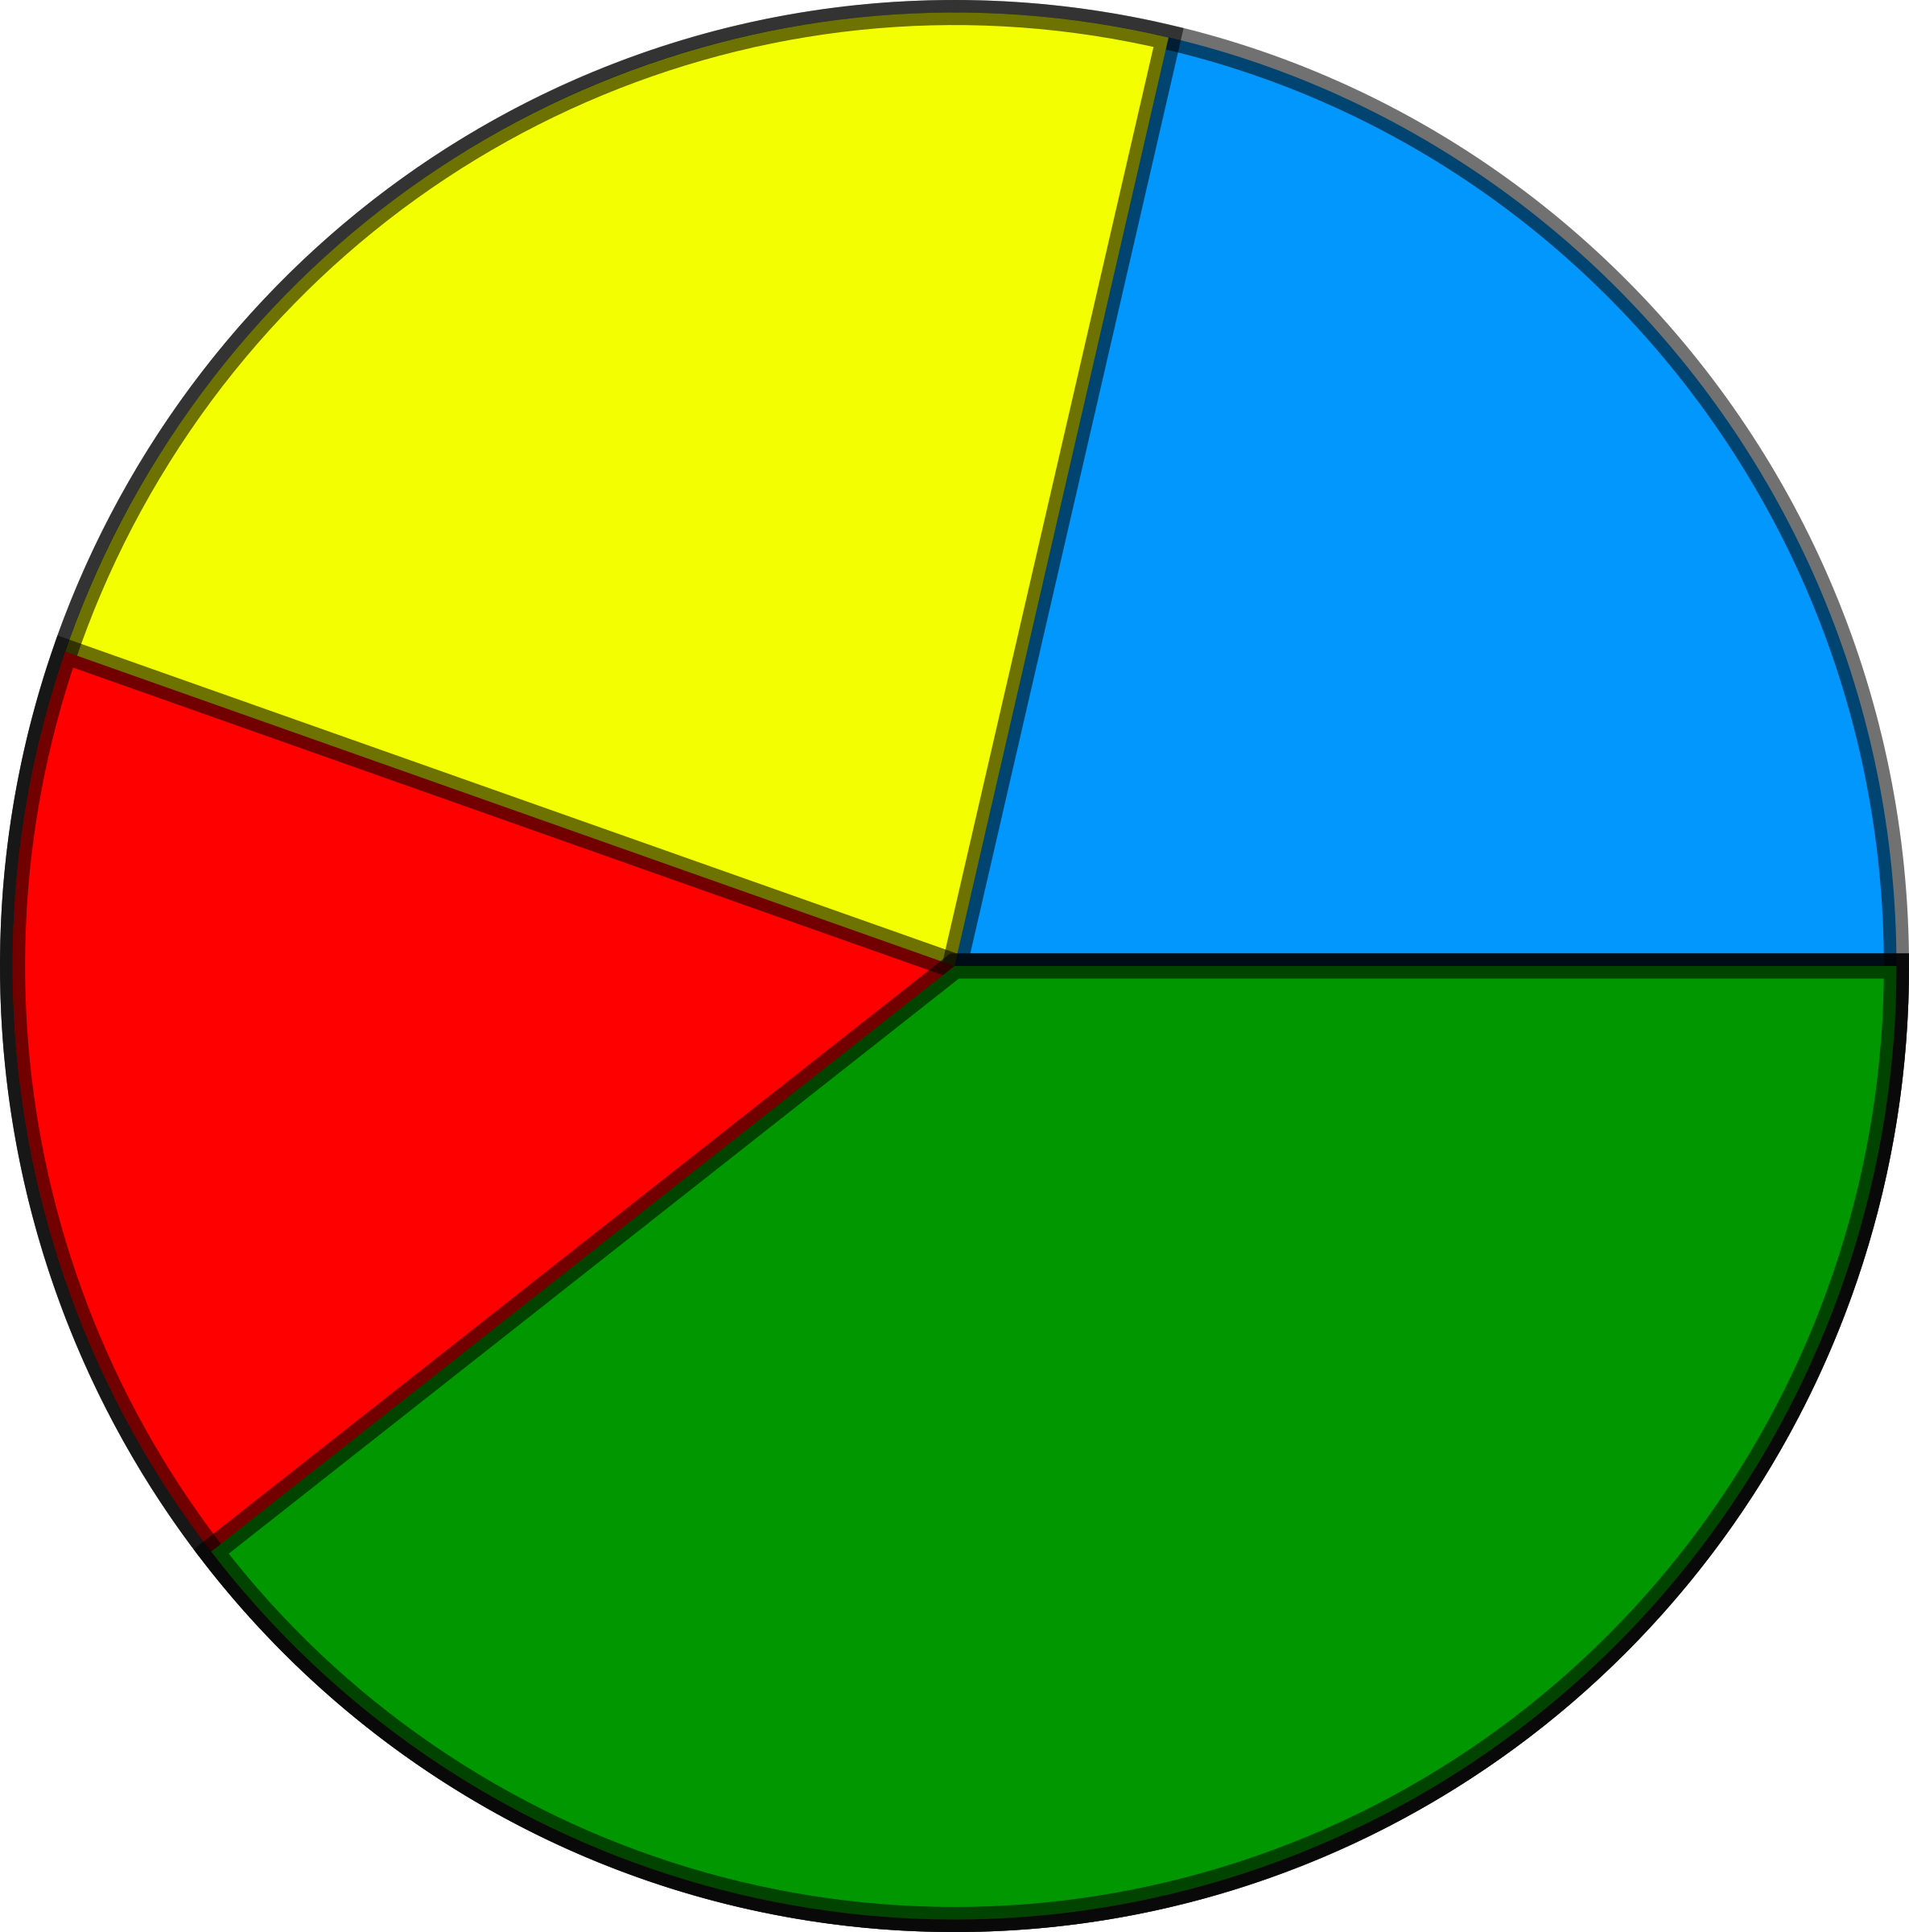 Clipart - Diagrama de sectores (piechart)